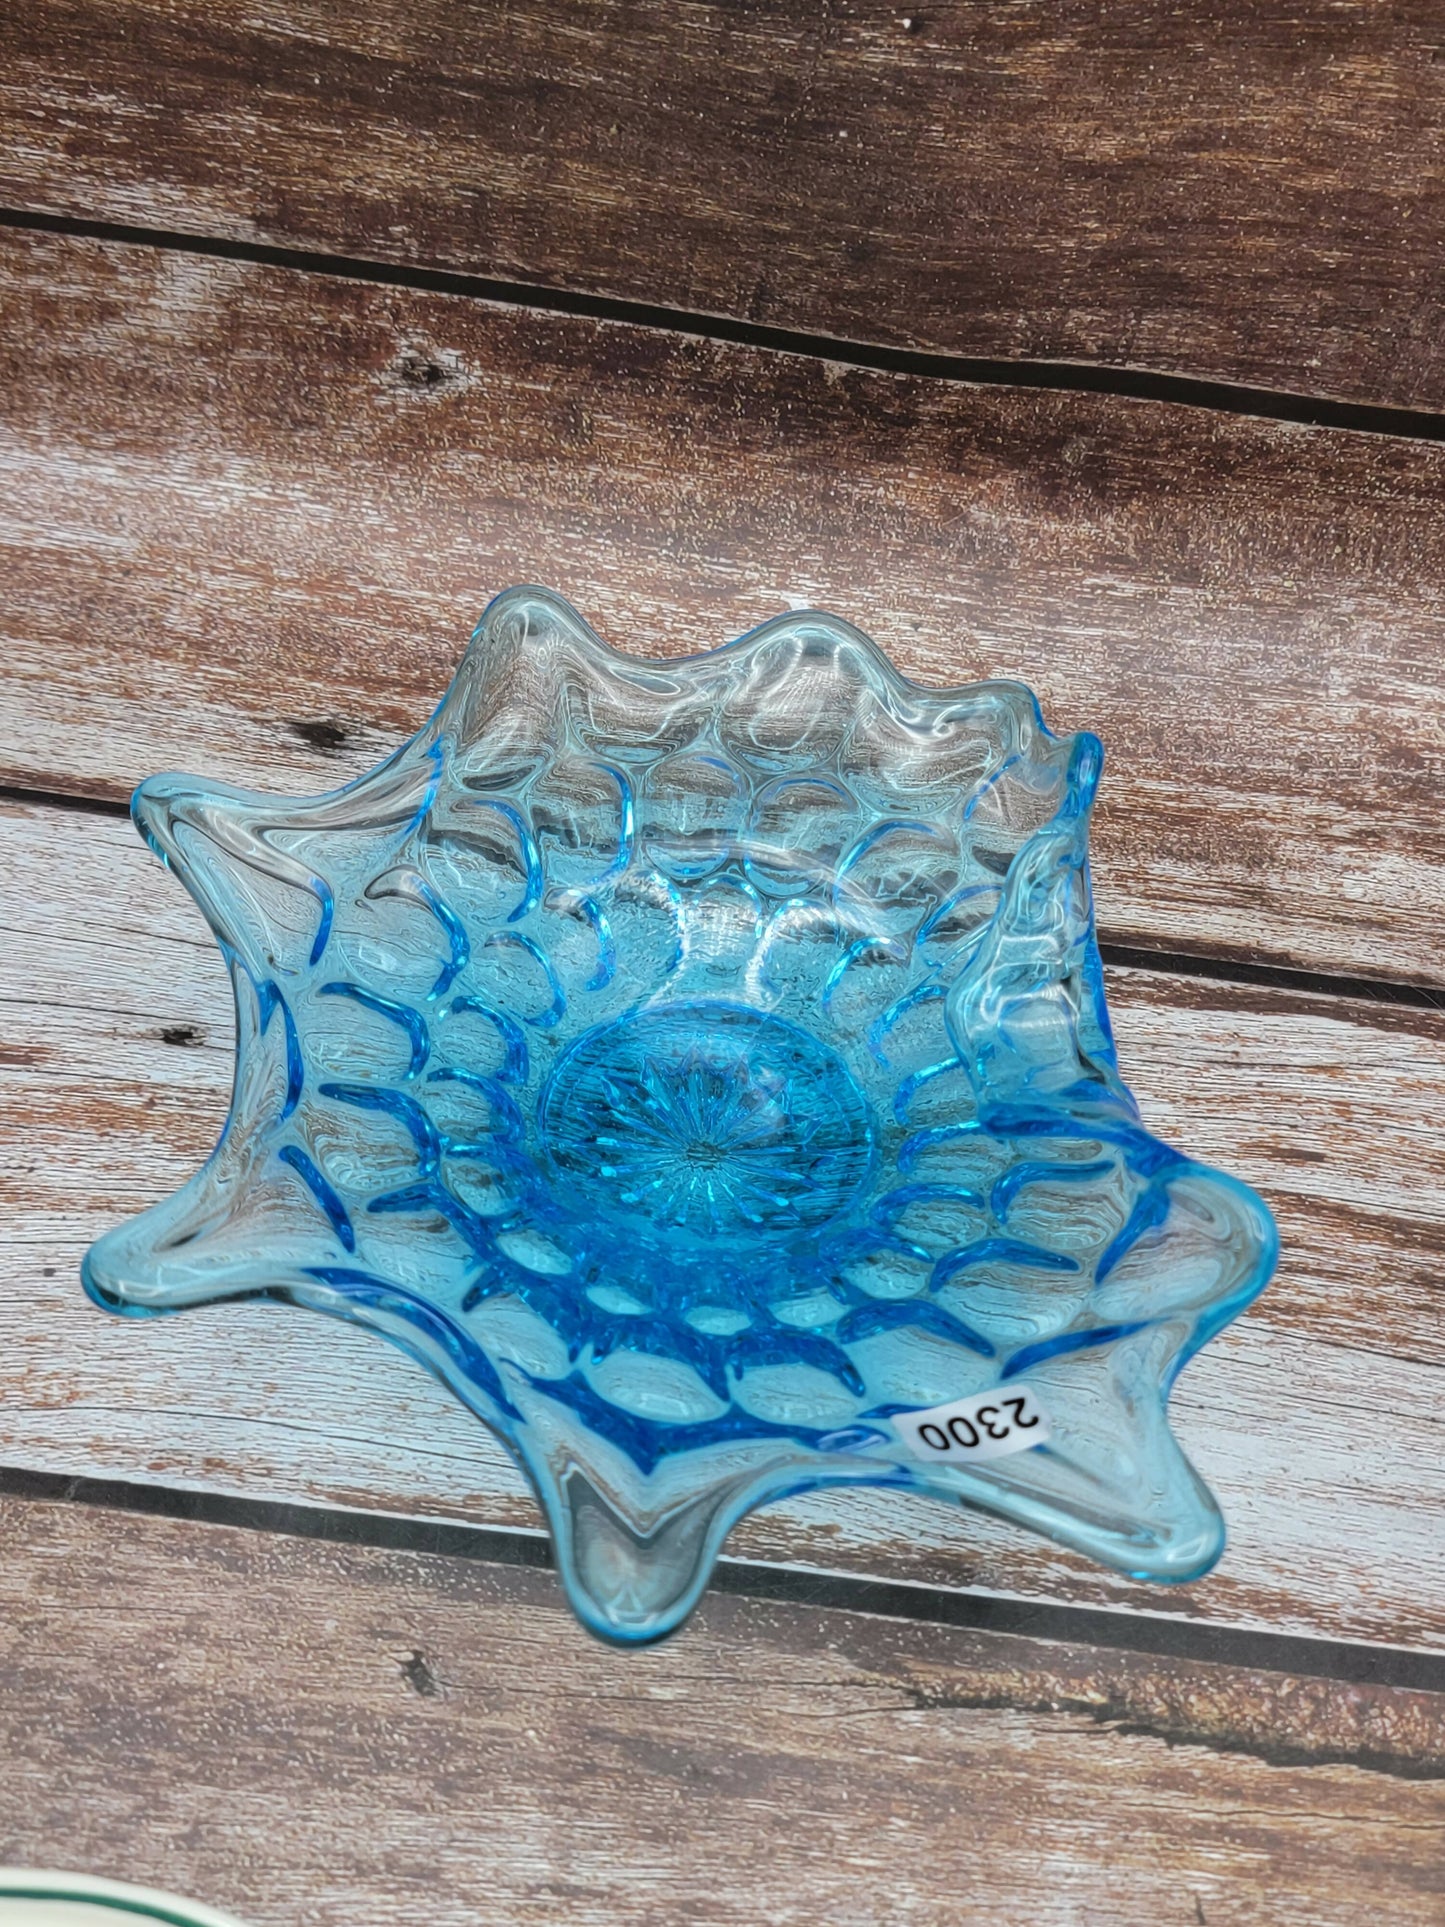 Vintage Fenton blue thumbprint glass dish